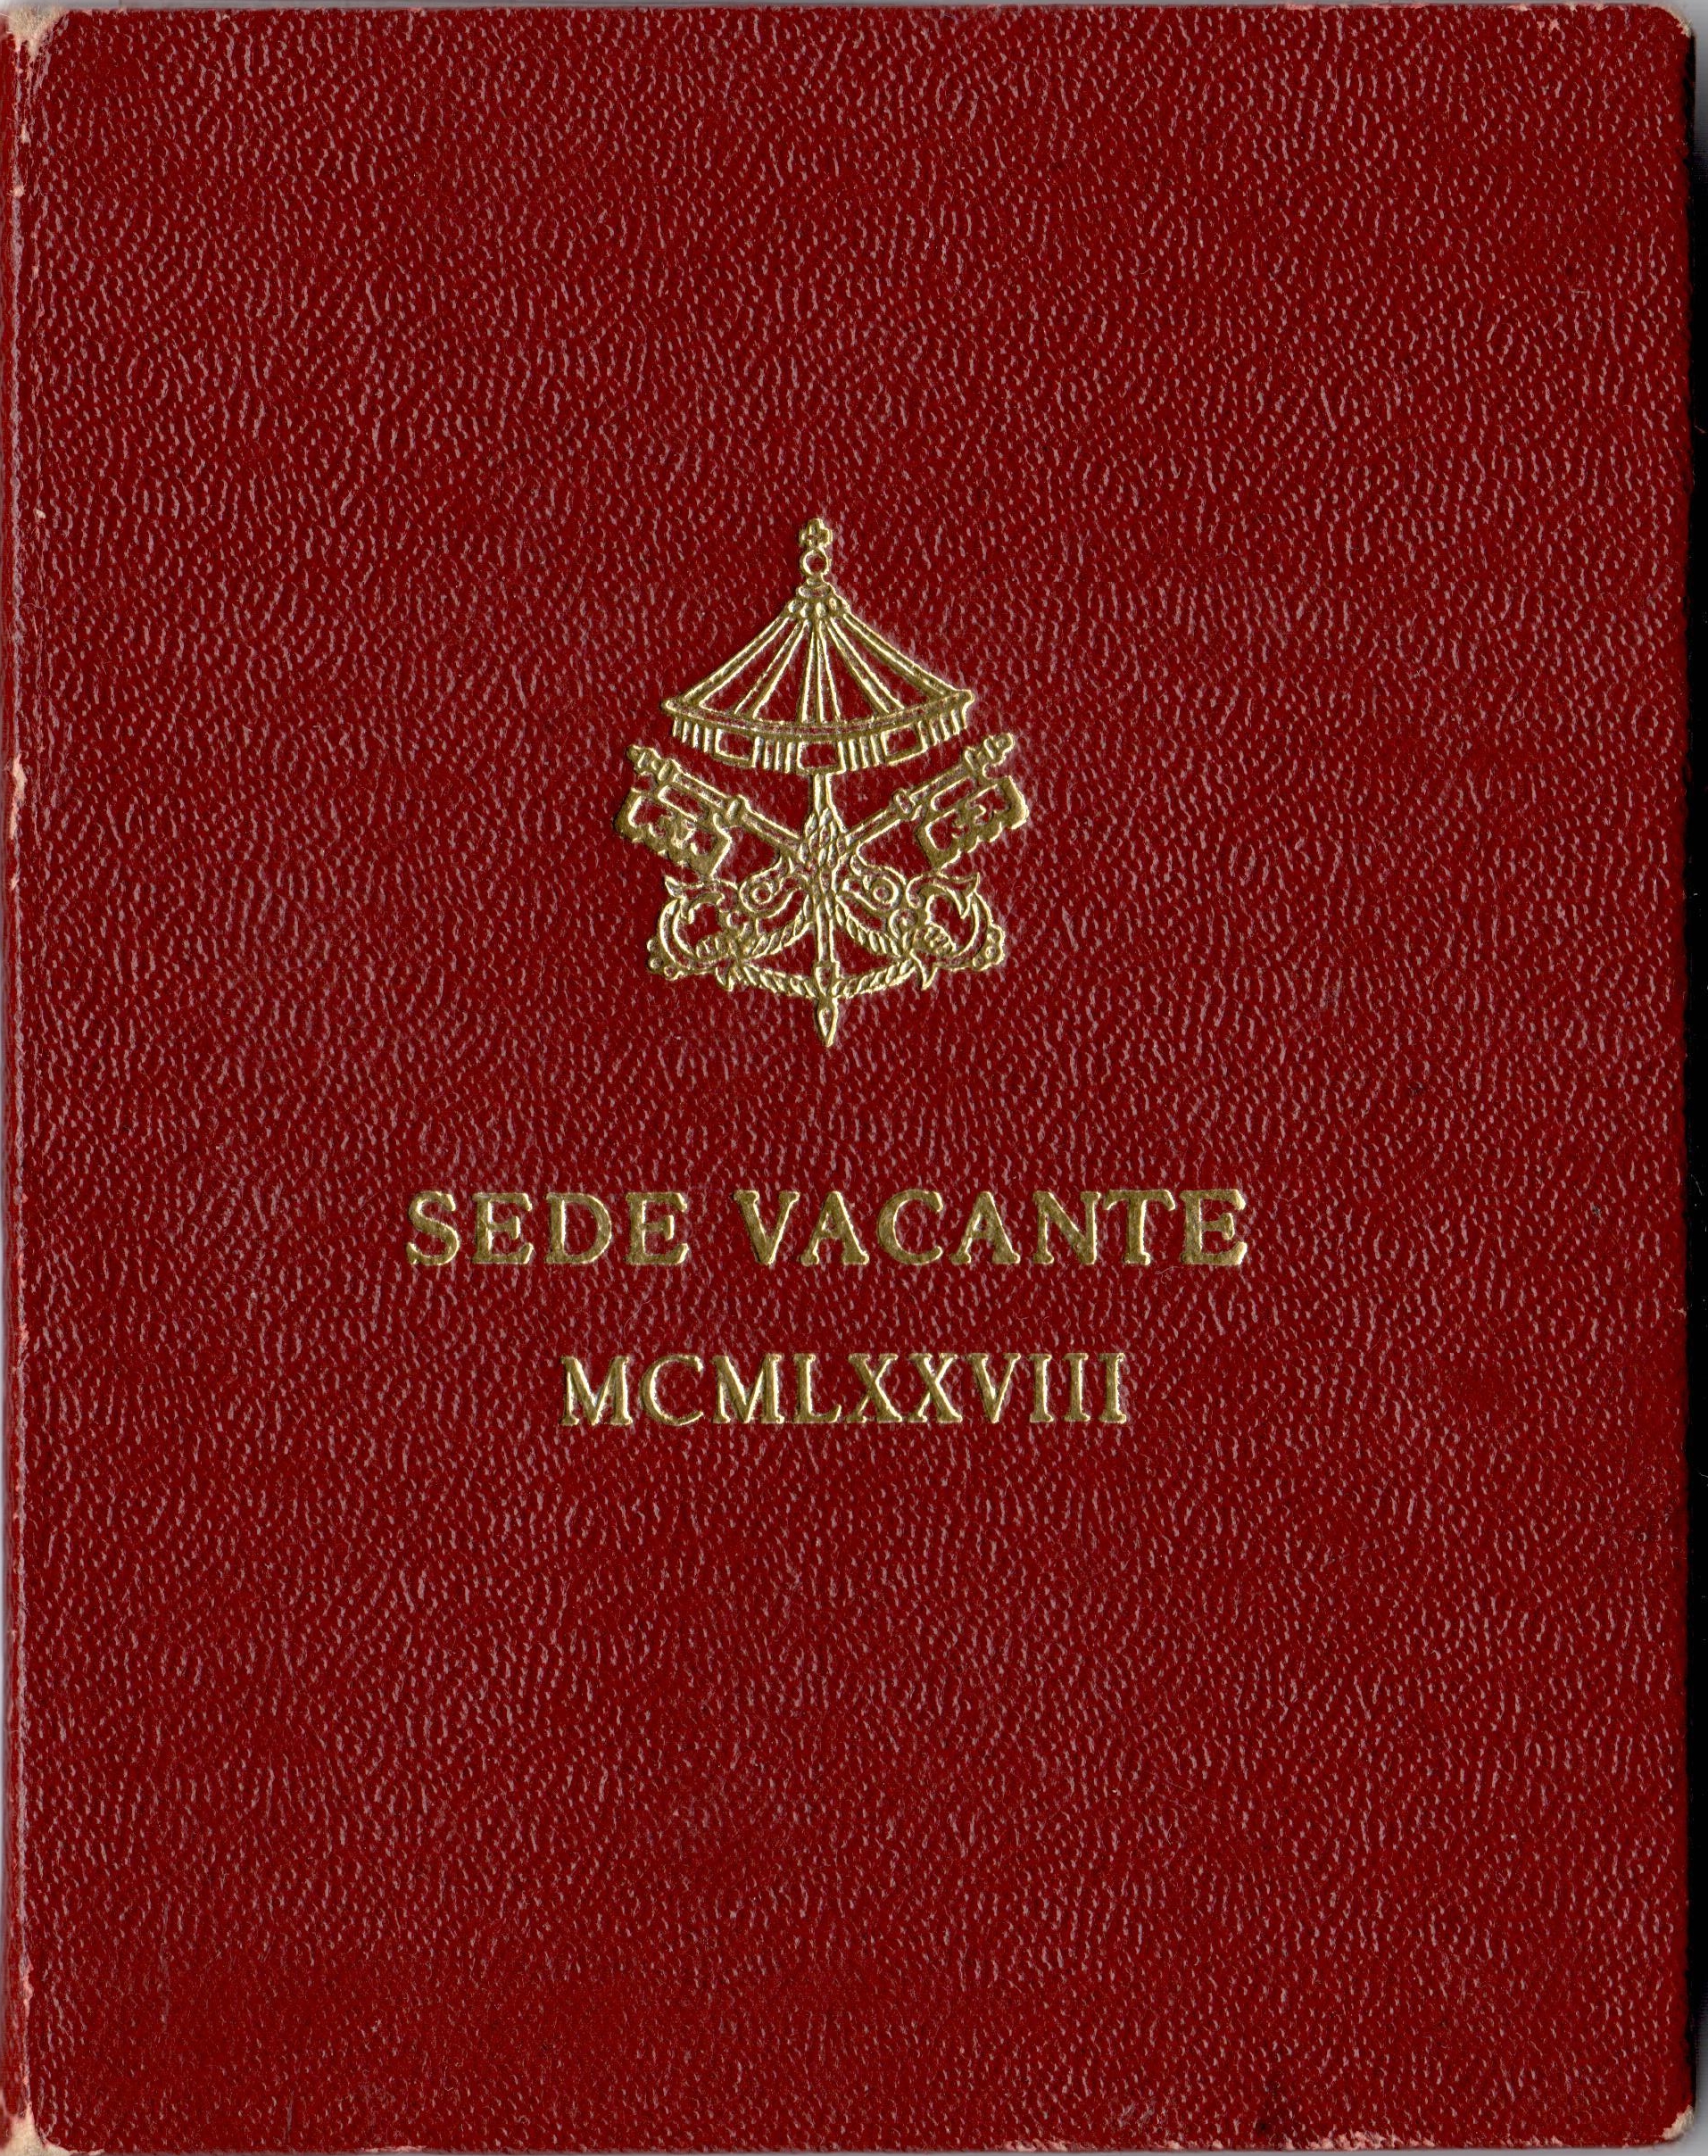 Vatican City, Vacant Seat MCMLXXVIII, 1978